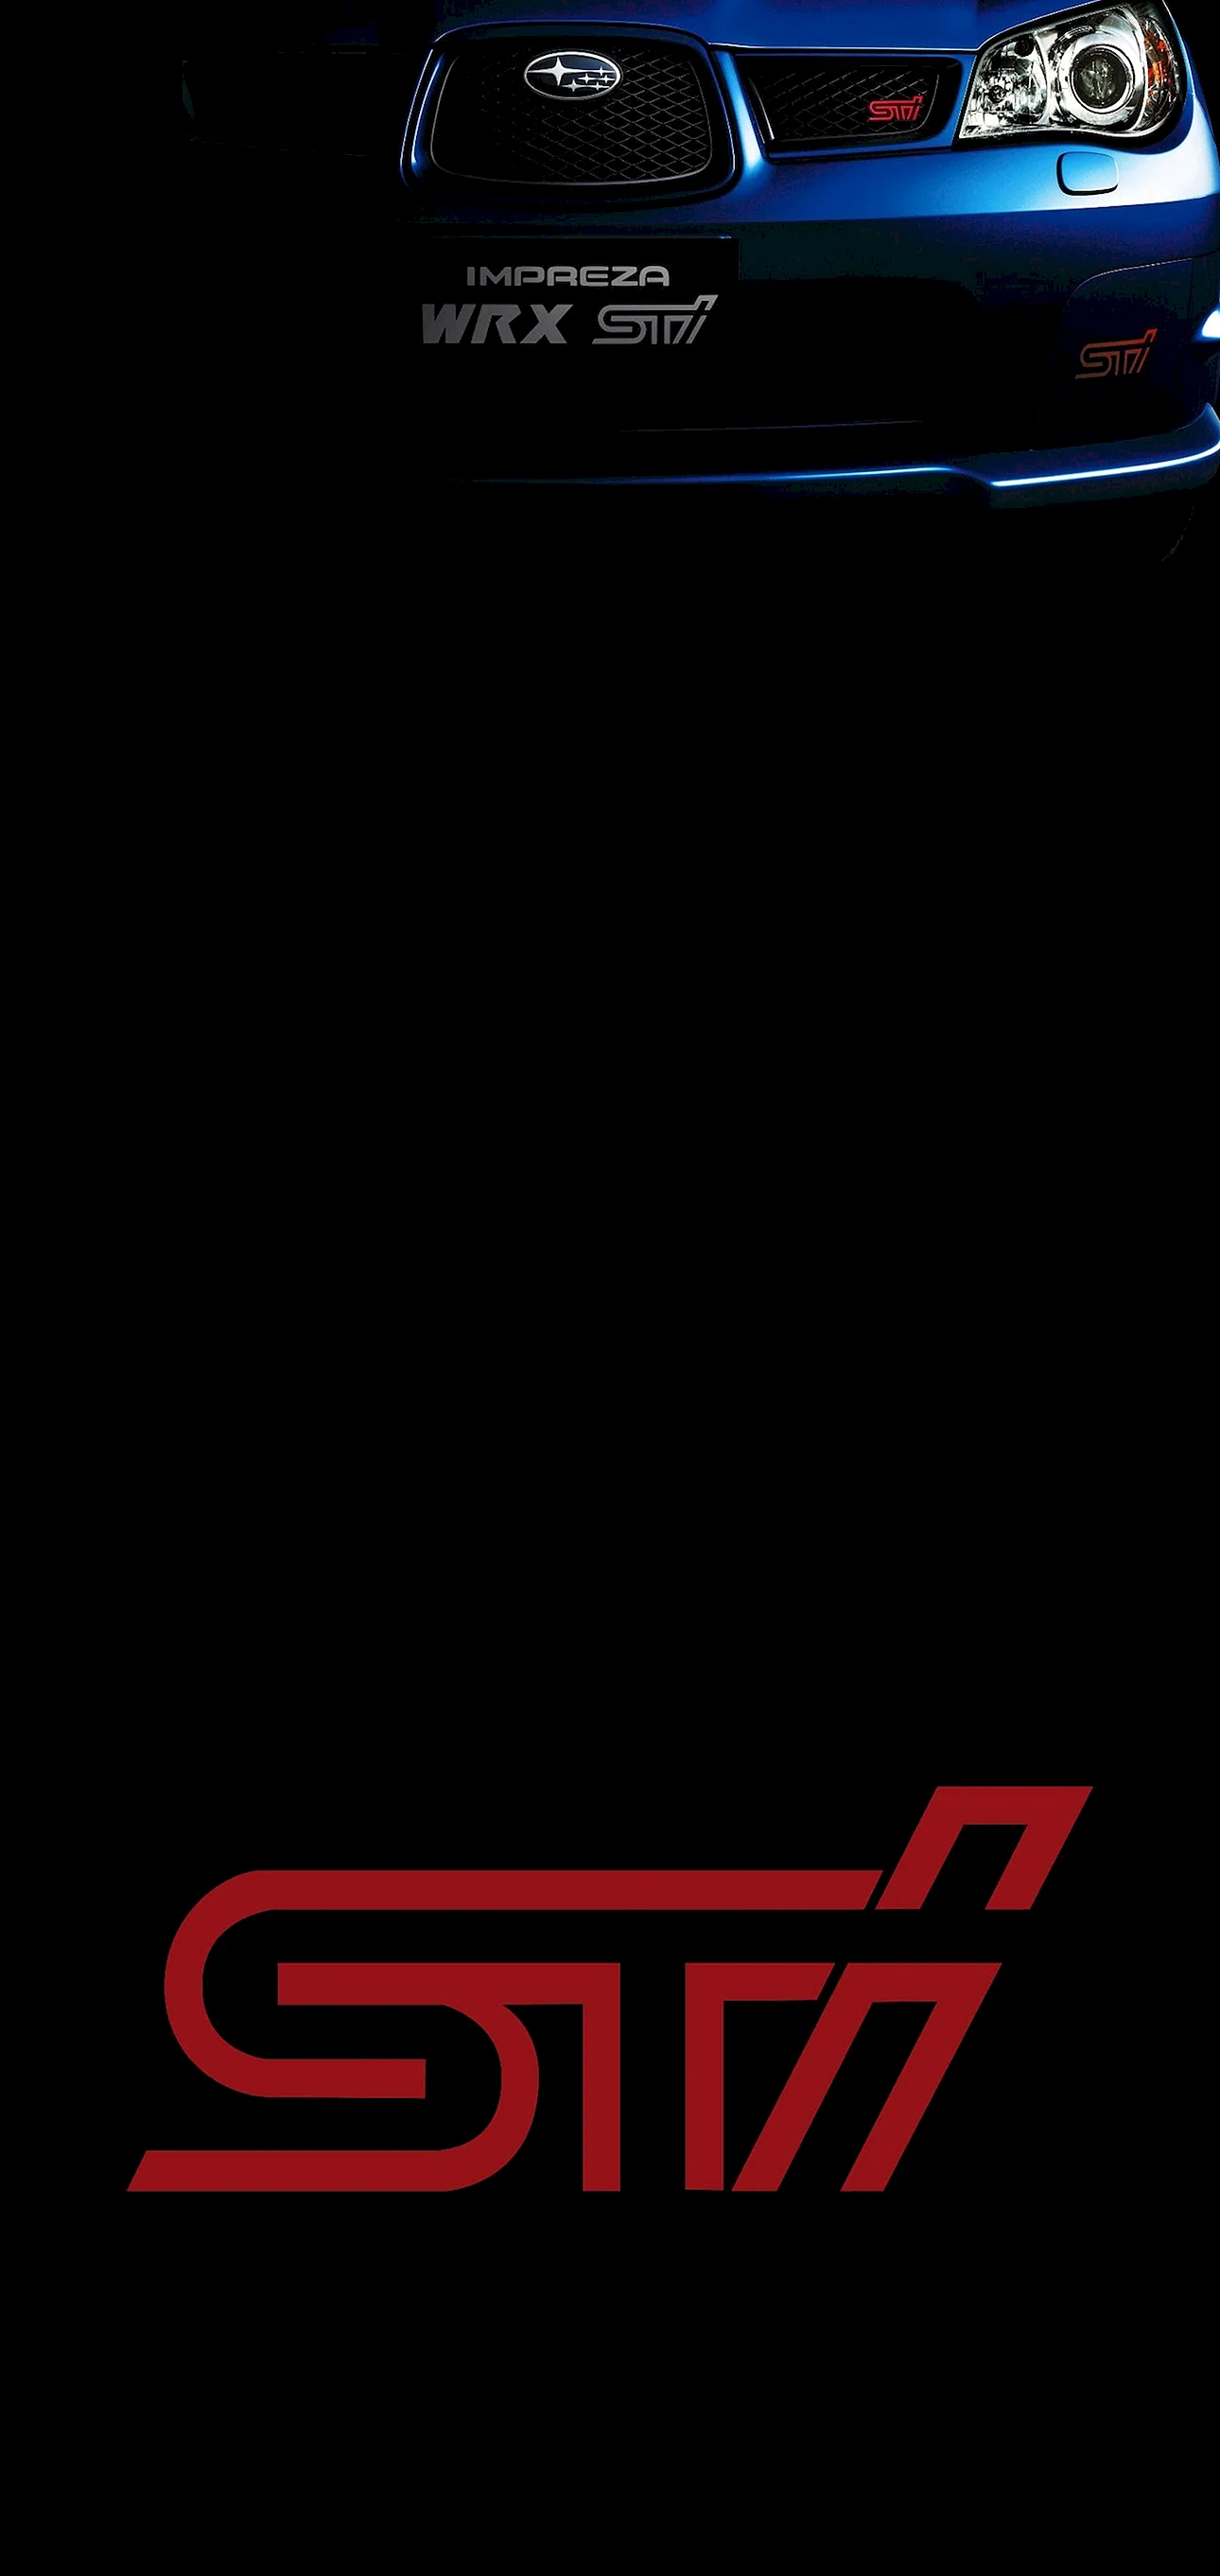 Sti Logo Wallpaper For iPhone